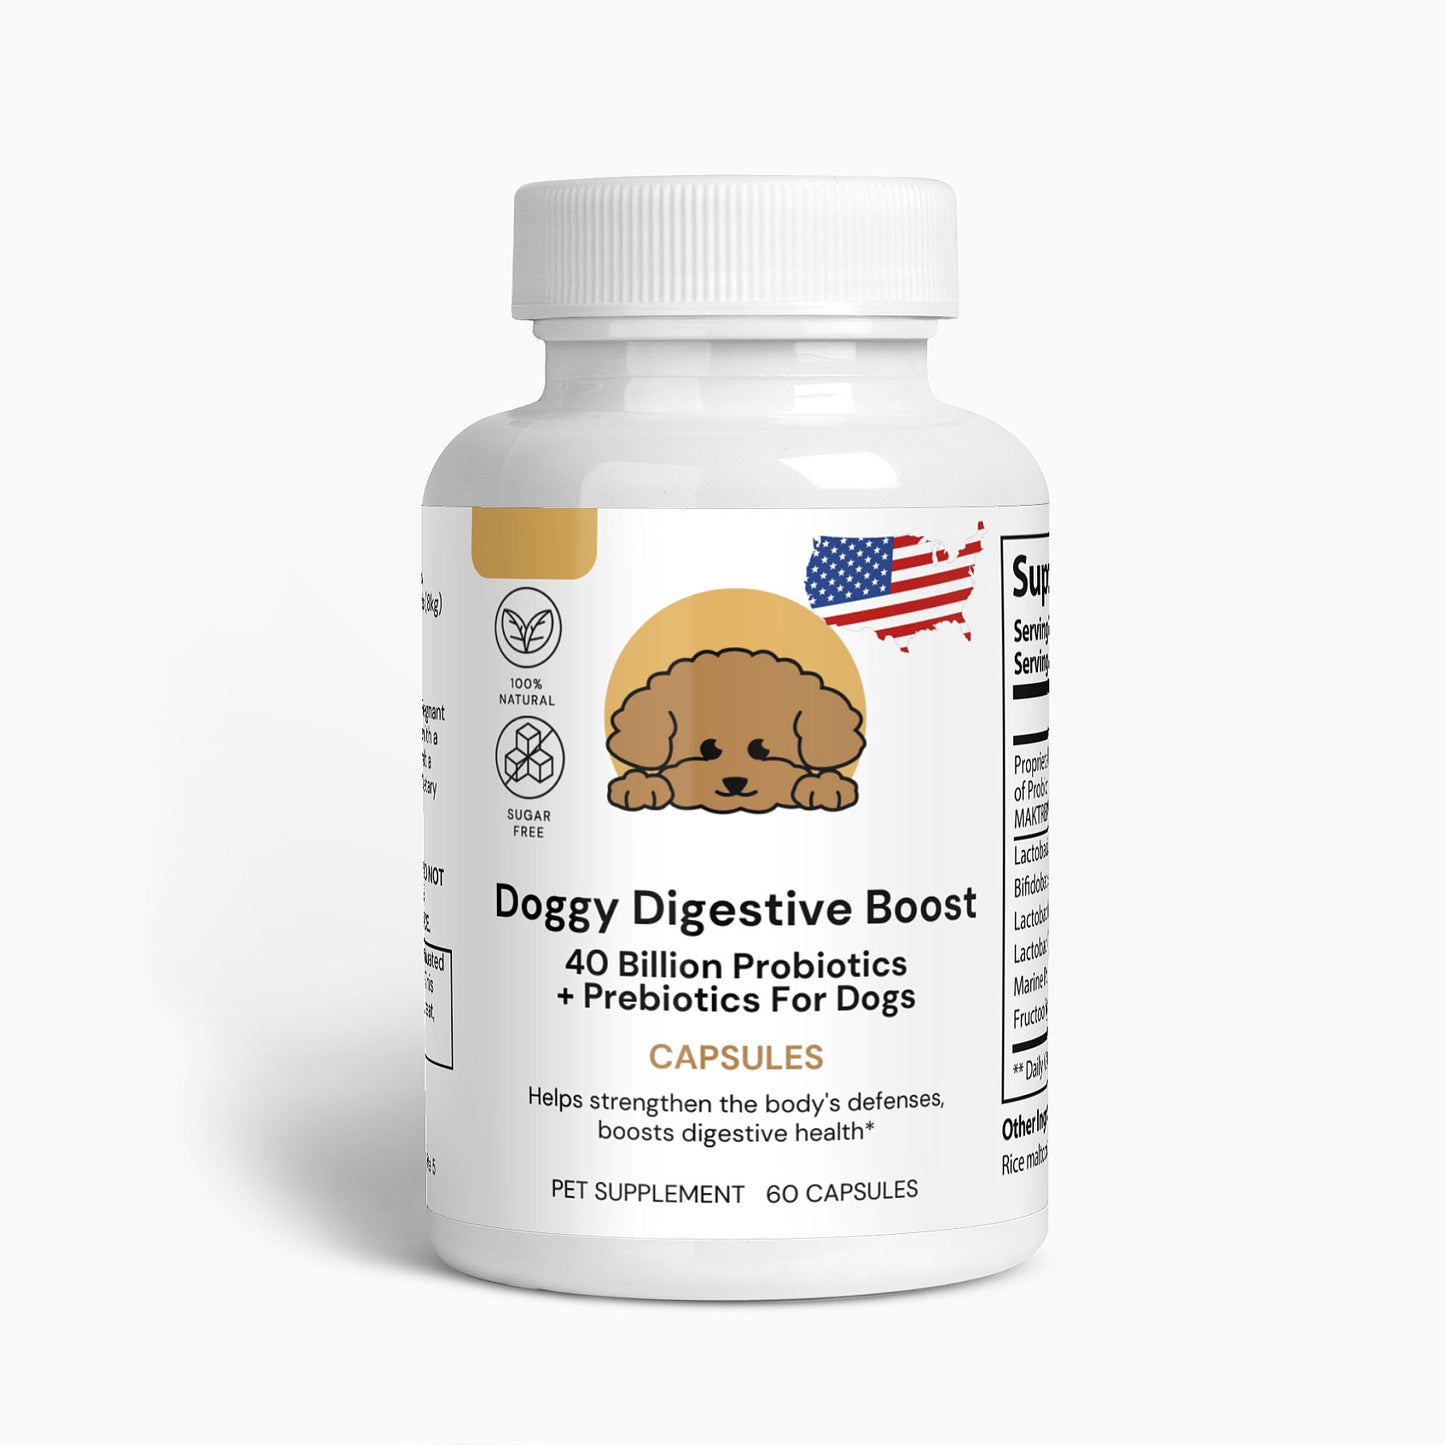 Doggy Digestive Boost - 40 Billion Prebiotics